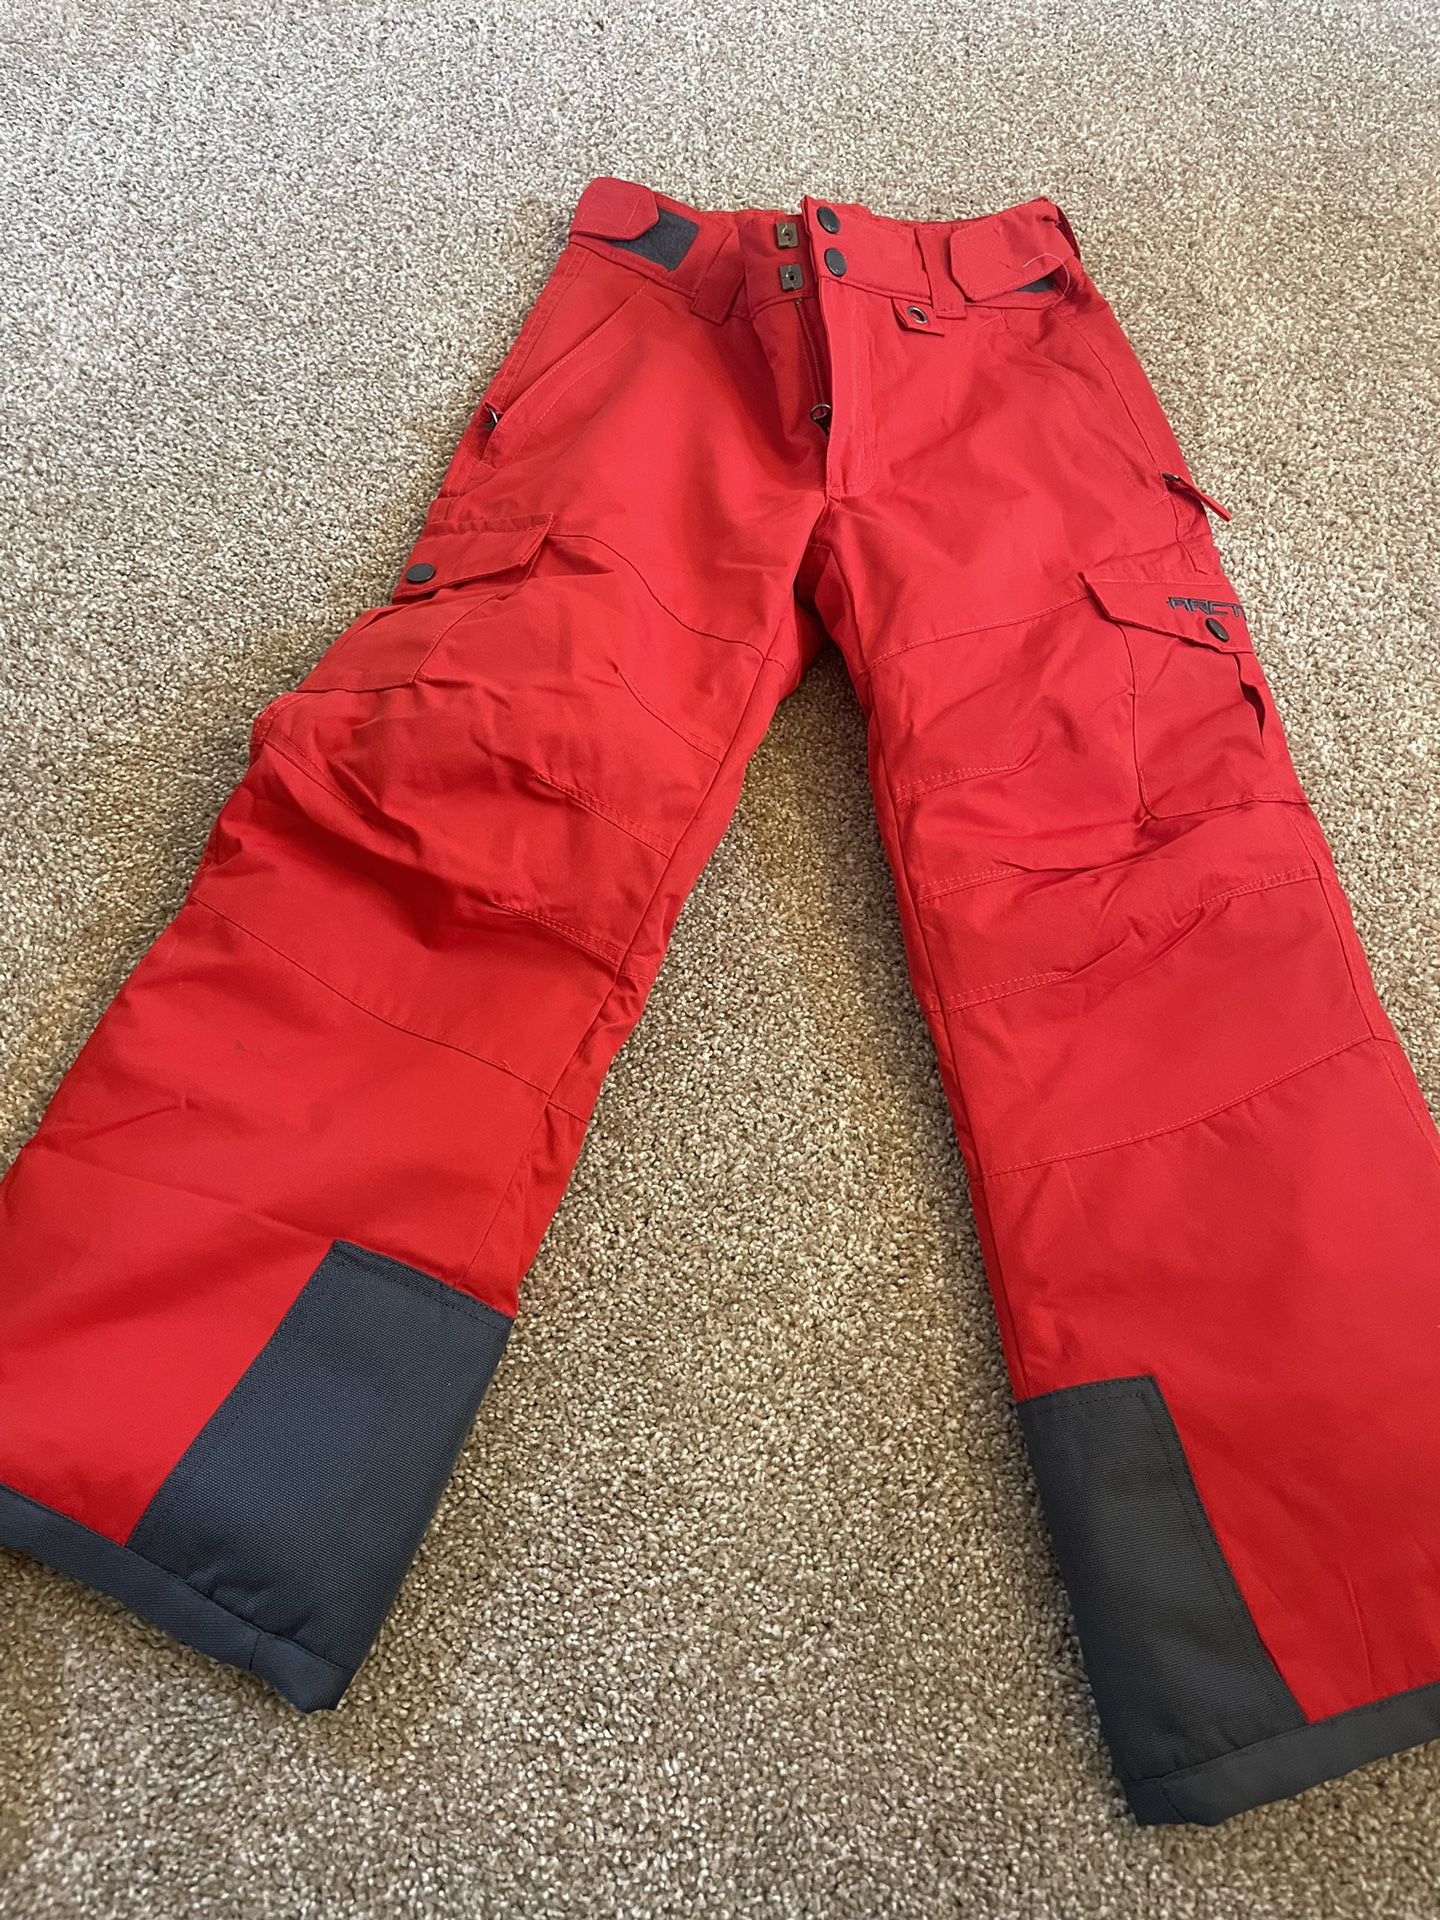 Arc’teryx Snow pants for Sale in Kirkland, WA - OfferUp